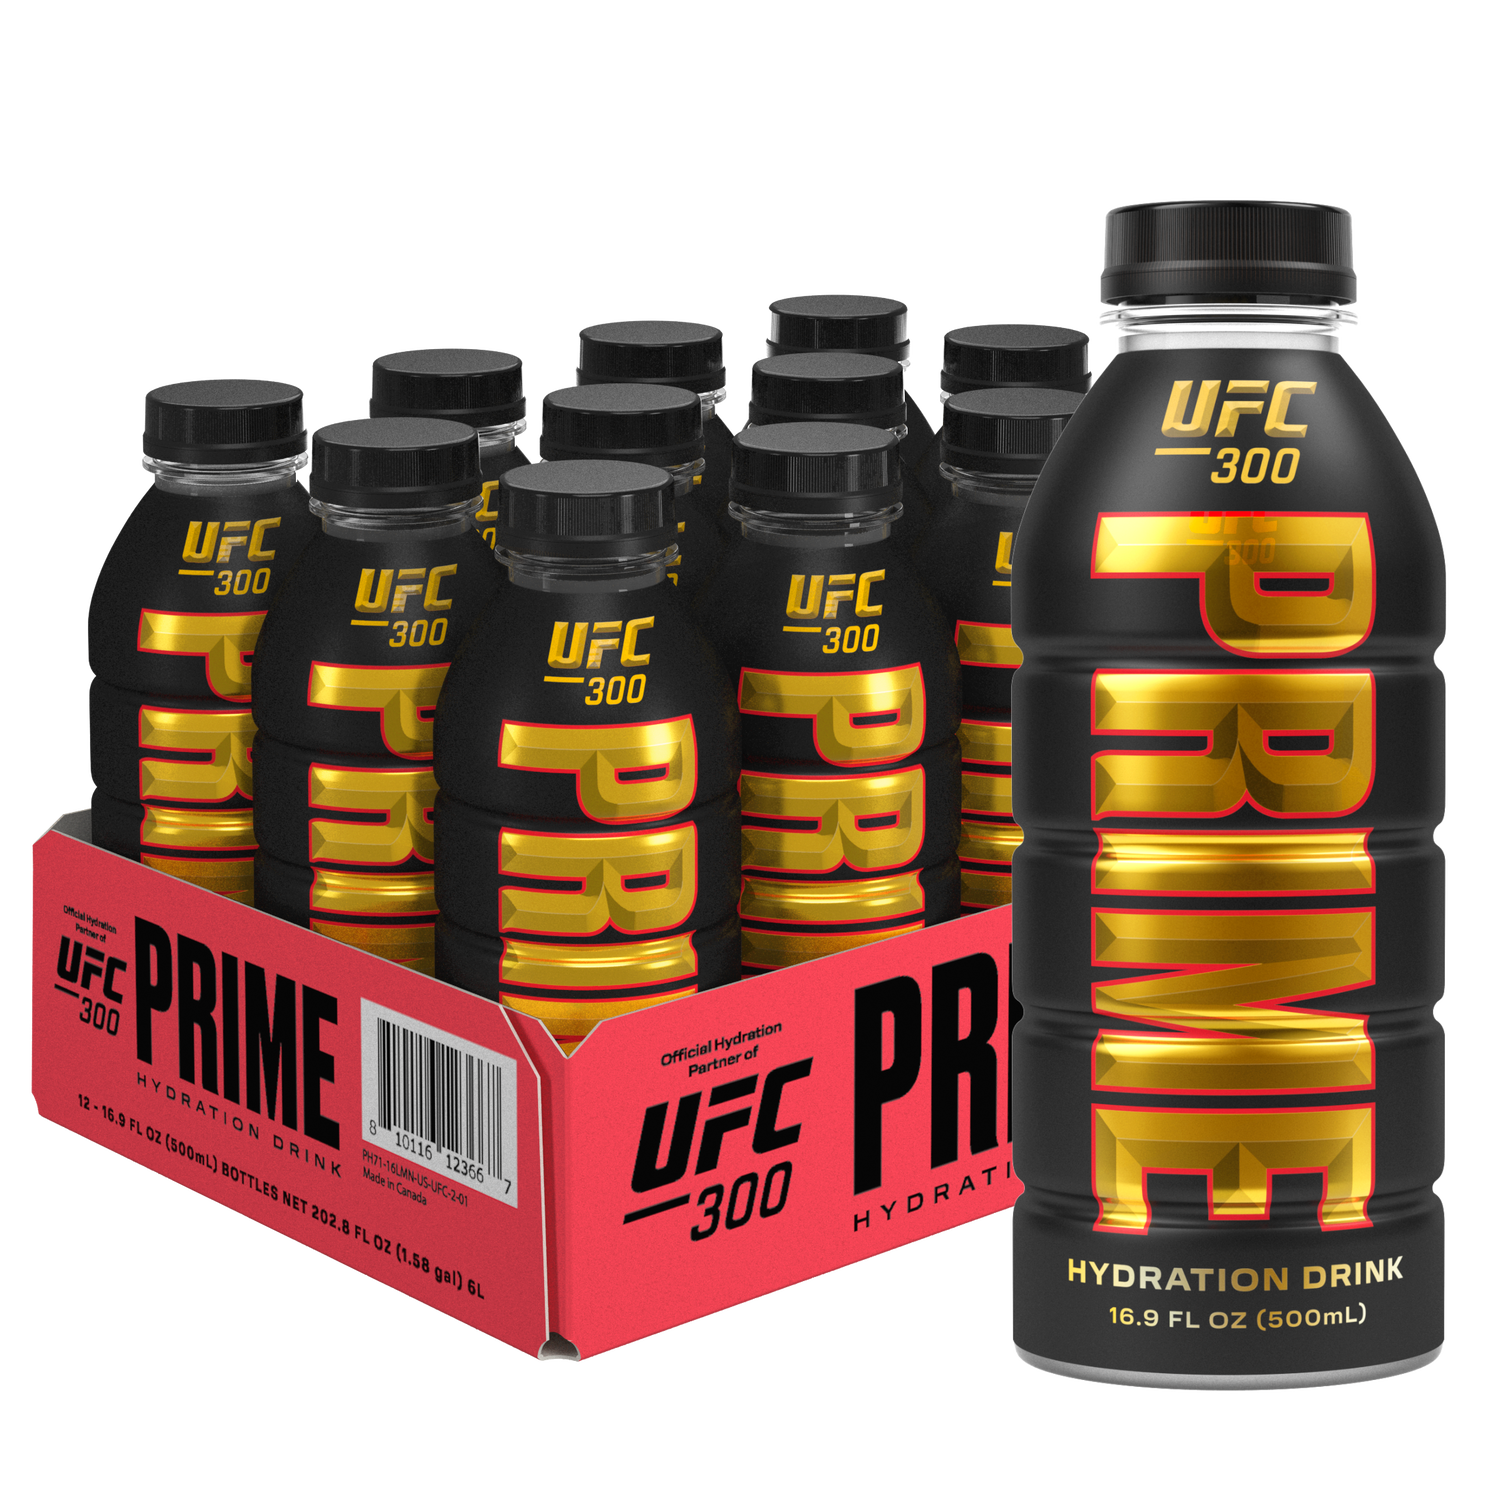 PRIME - Hydration Drink x UFC 300 - 12 Bottles